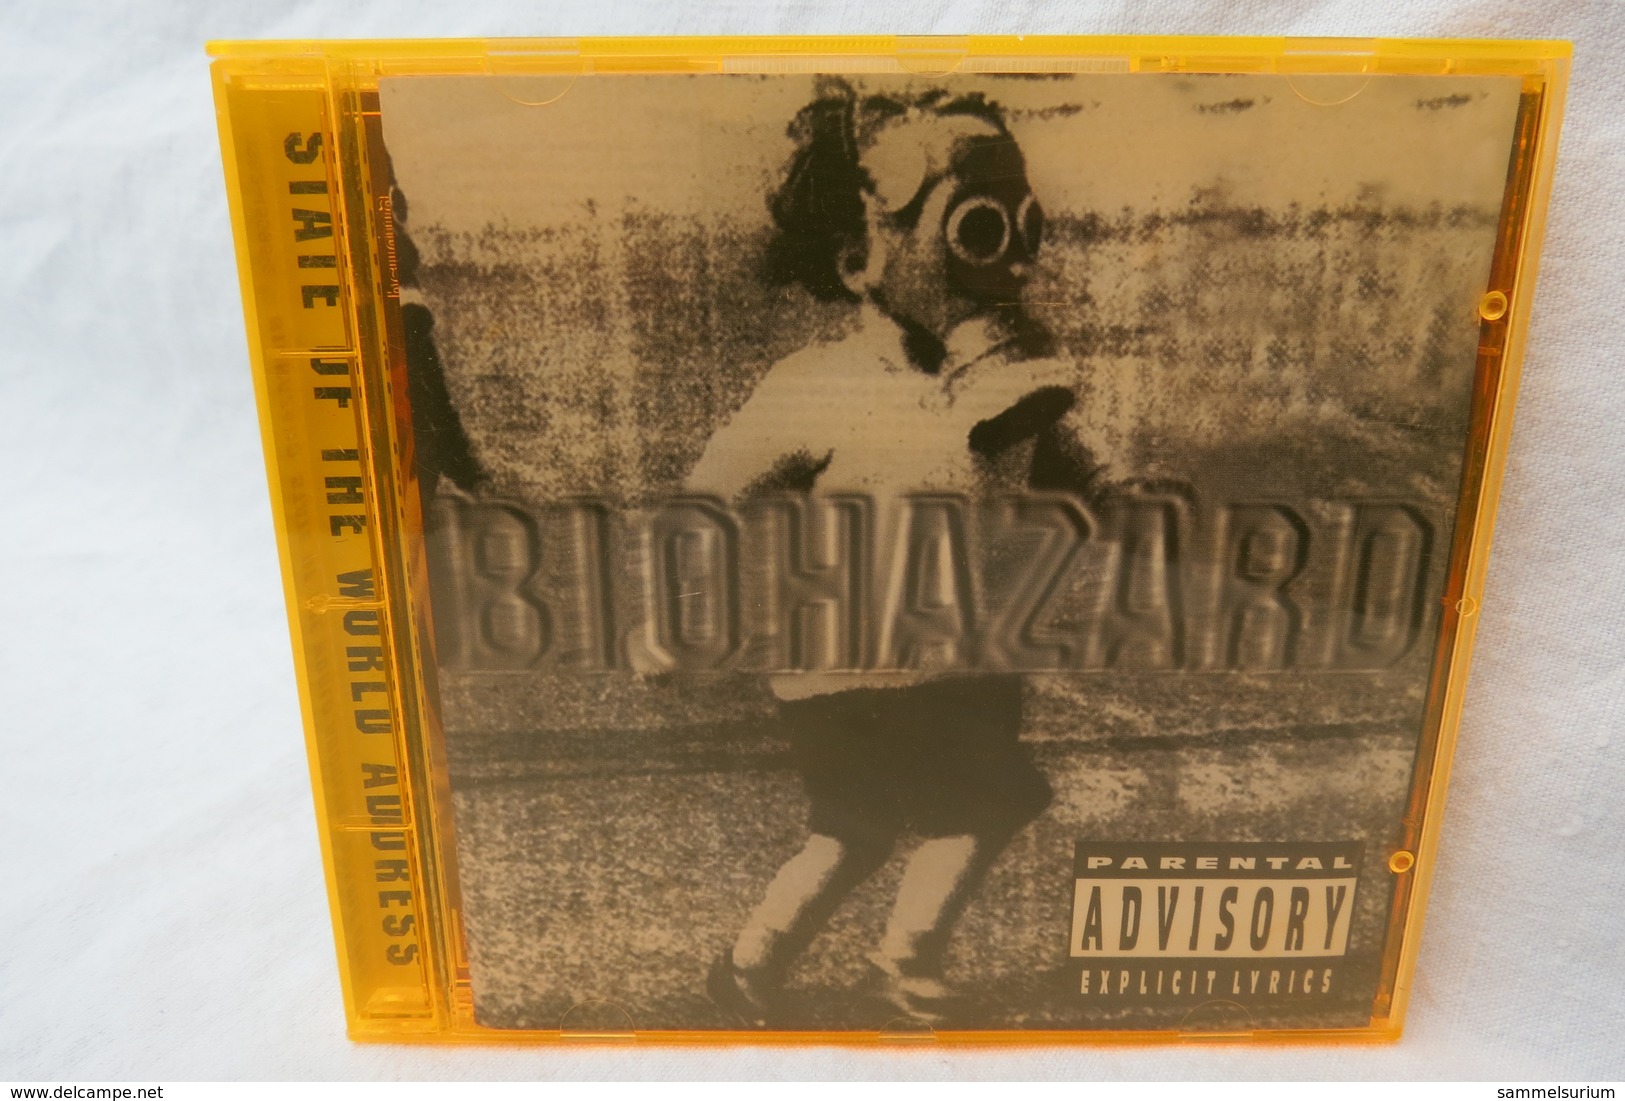 CD "Biohazard" State Of The World Address (parental Advisory Explicit Lyrics) - Editions Limitées